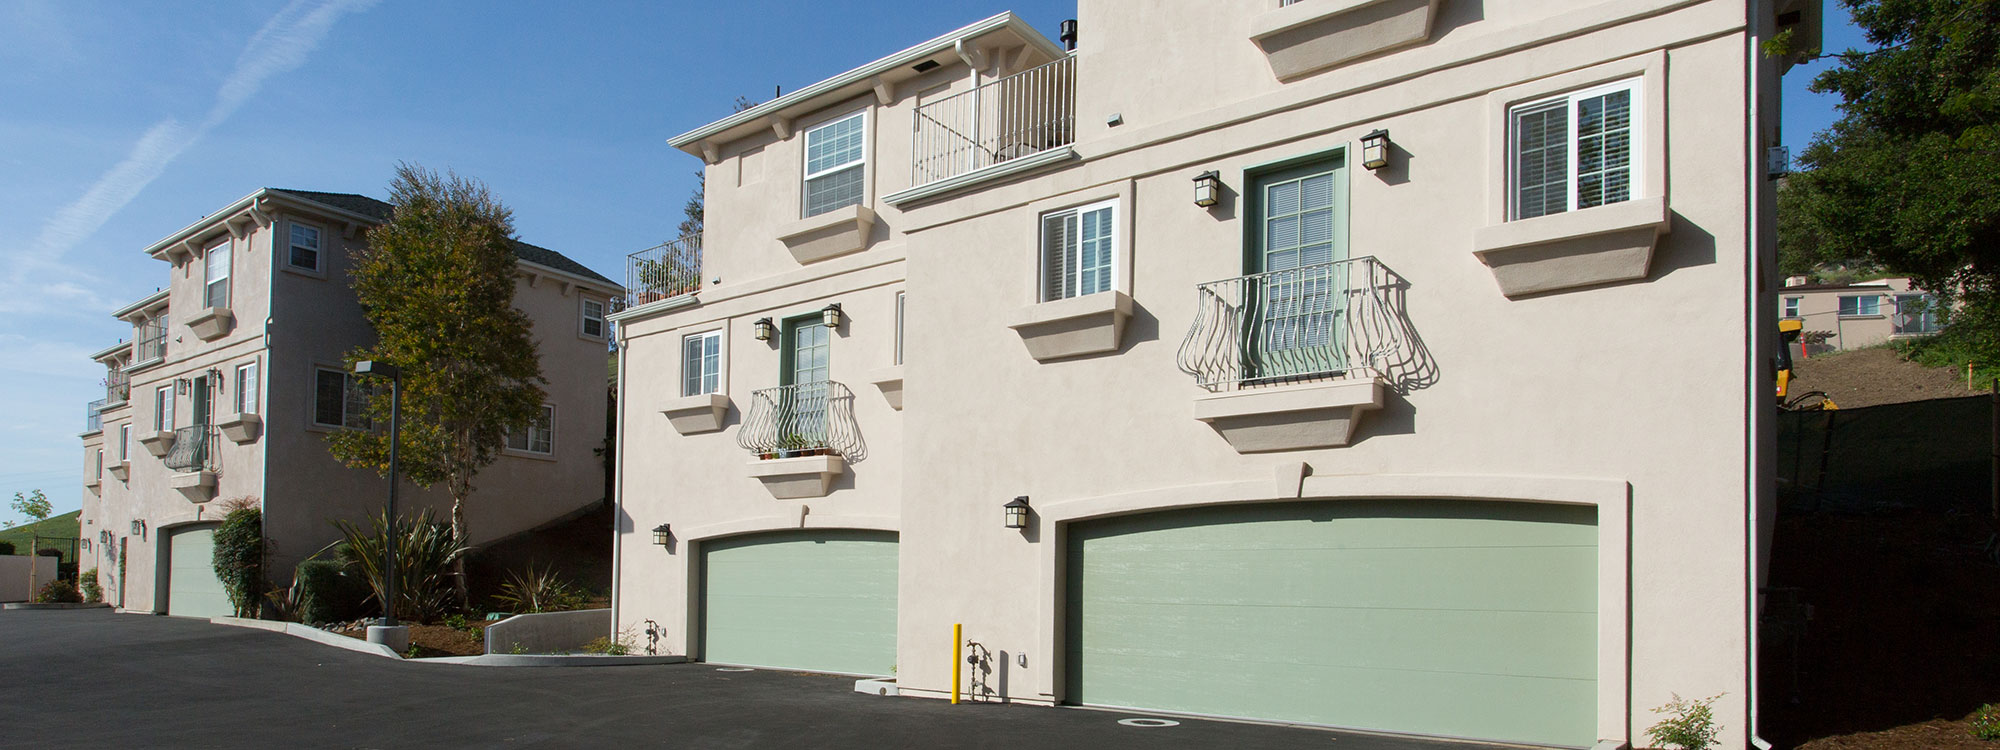 San Luis Obispo Multi-residence Construction Company - Apartment Building Builder - JW Design & Construction